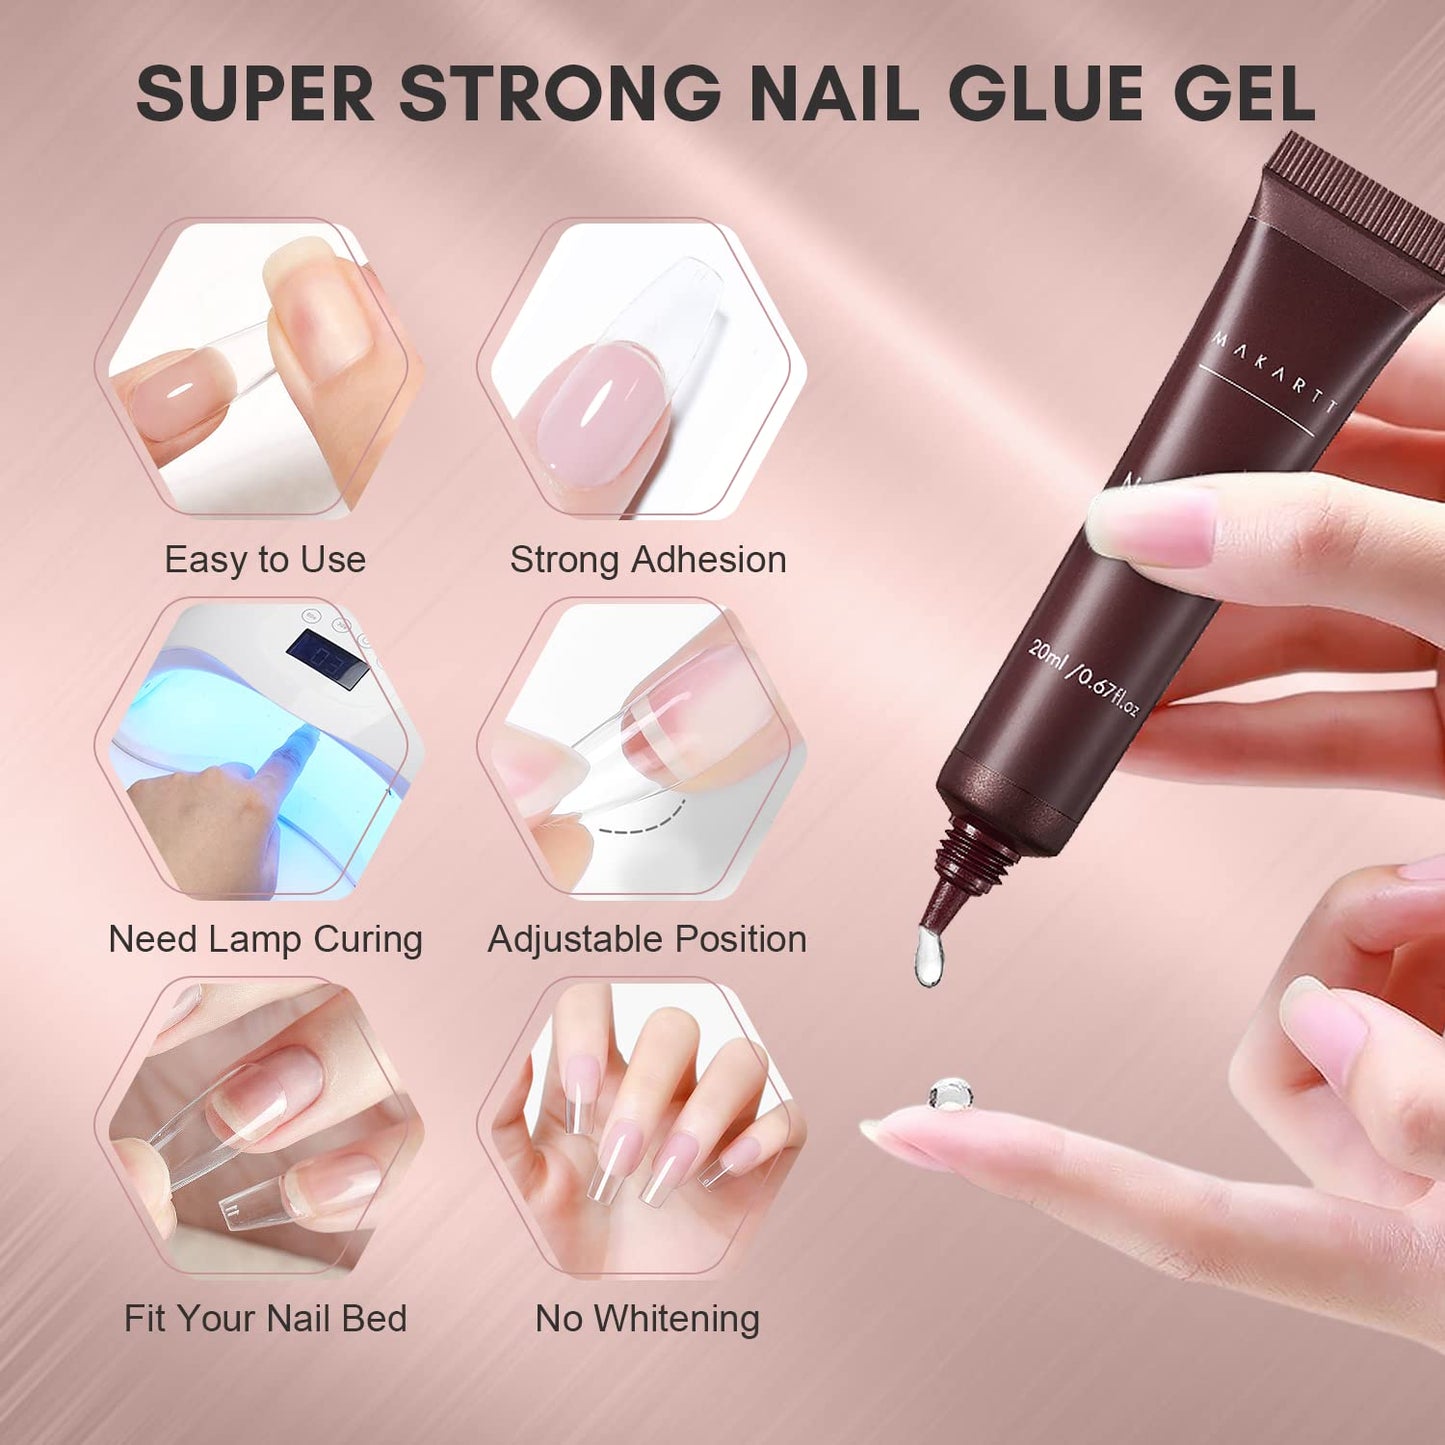 Makartt Solid Nail Glue Gel 2x 15ML for Acrylic Nails Tips Glue Gel for Press On Nails Fake Nails Solid Nail Adhesive Gel Curing